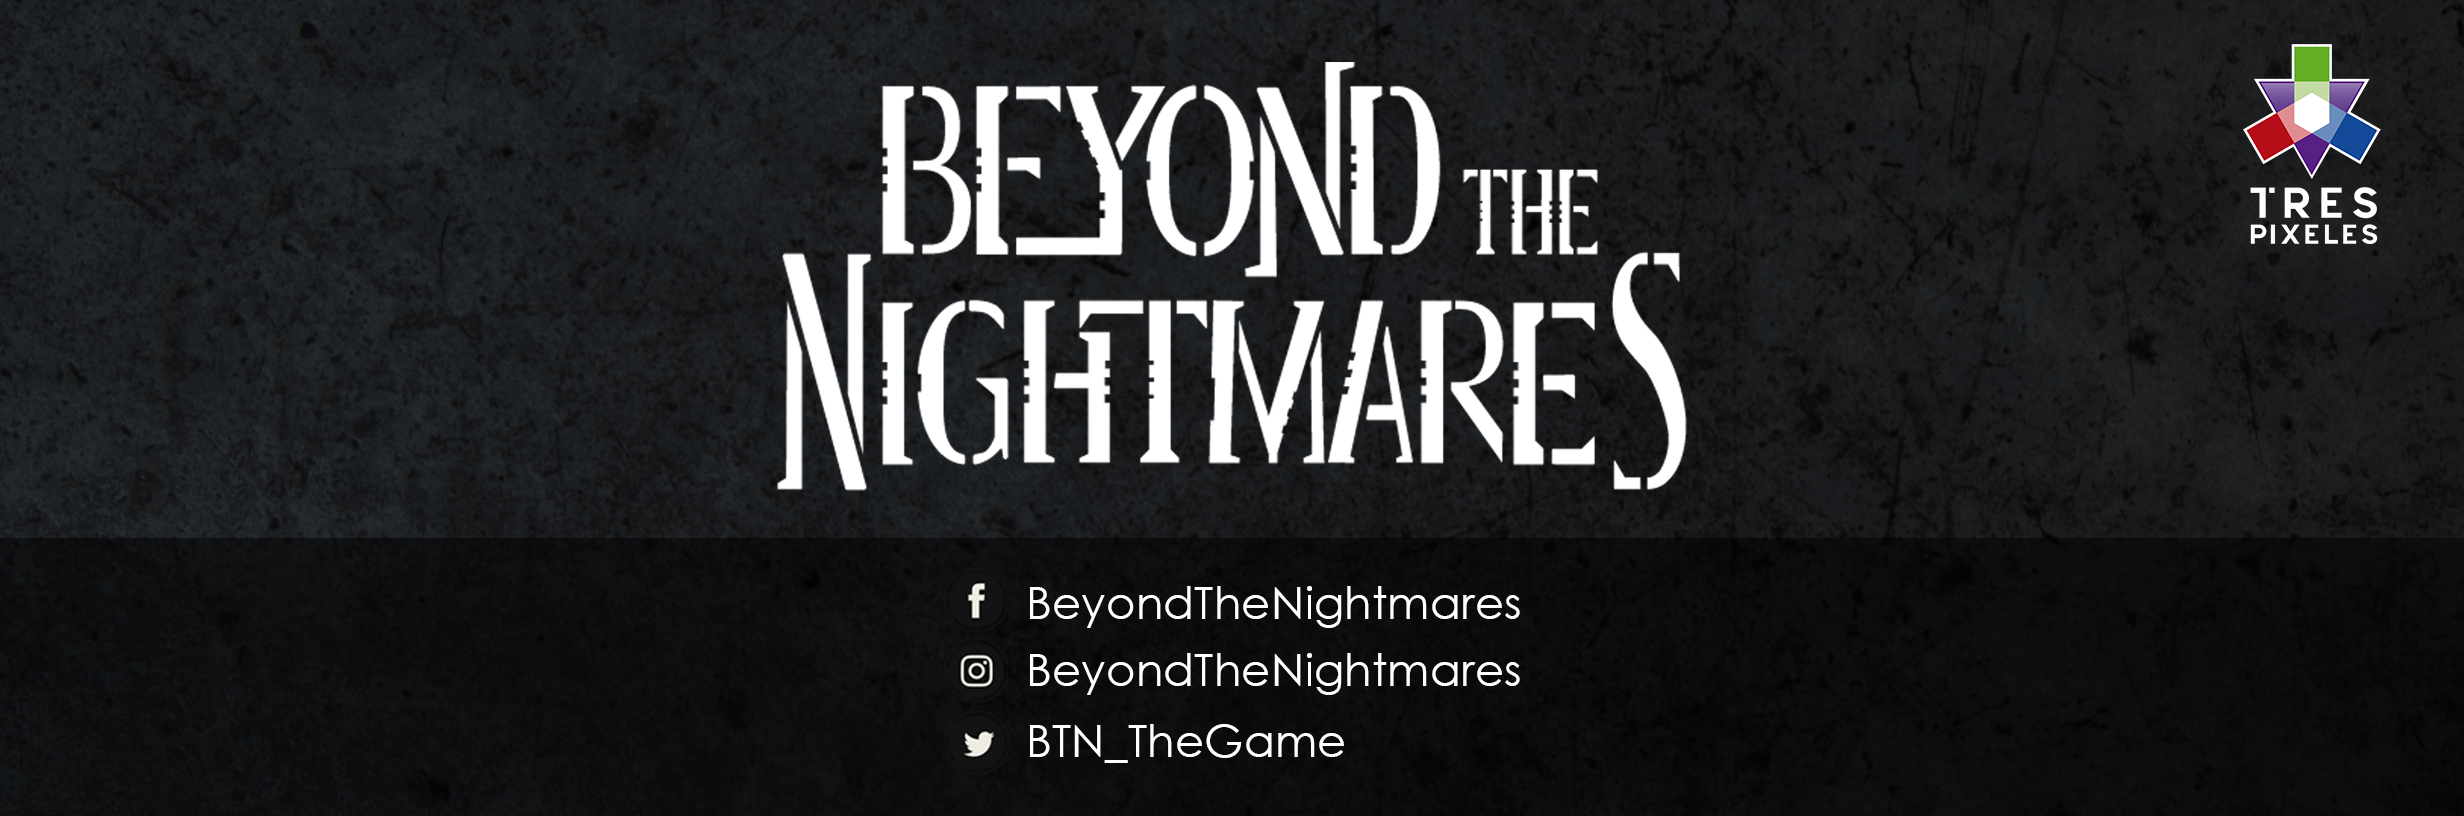 Beyond The Nightmares